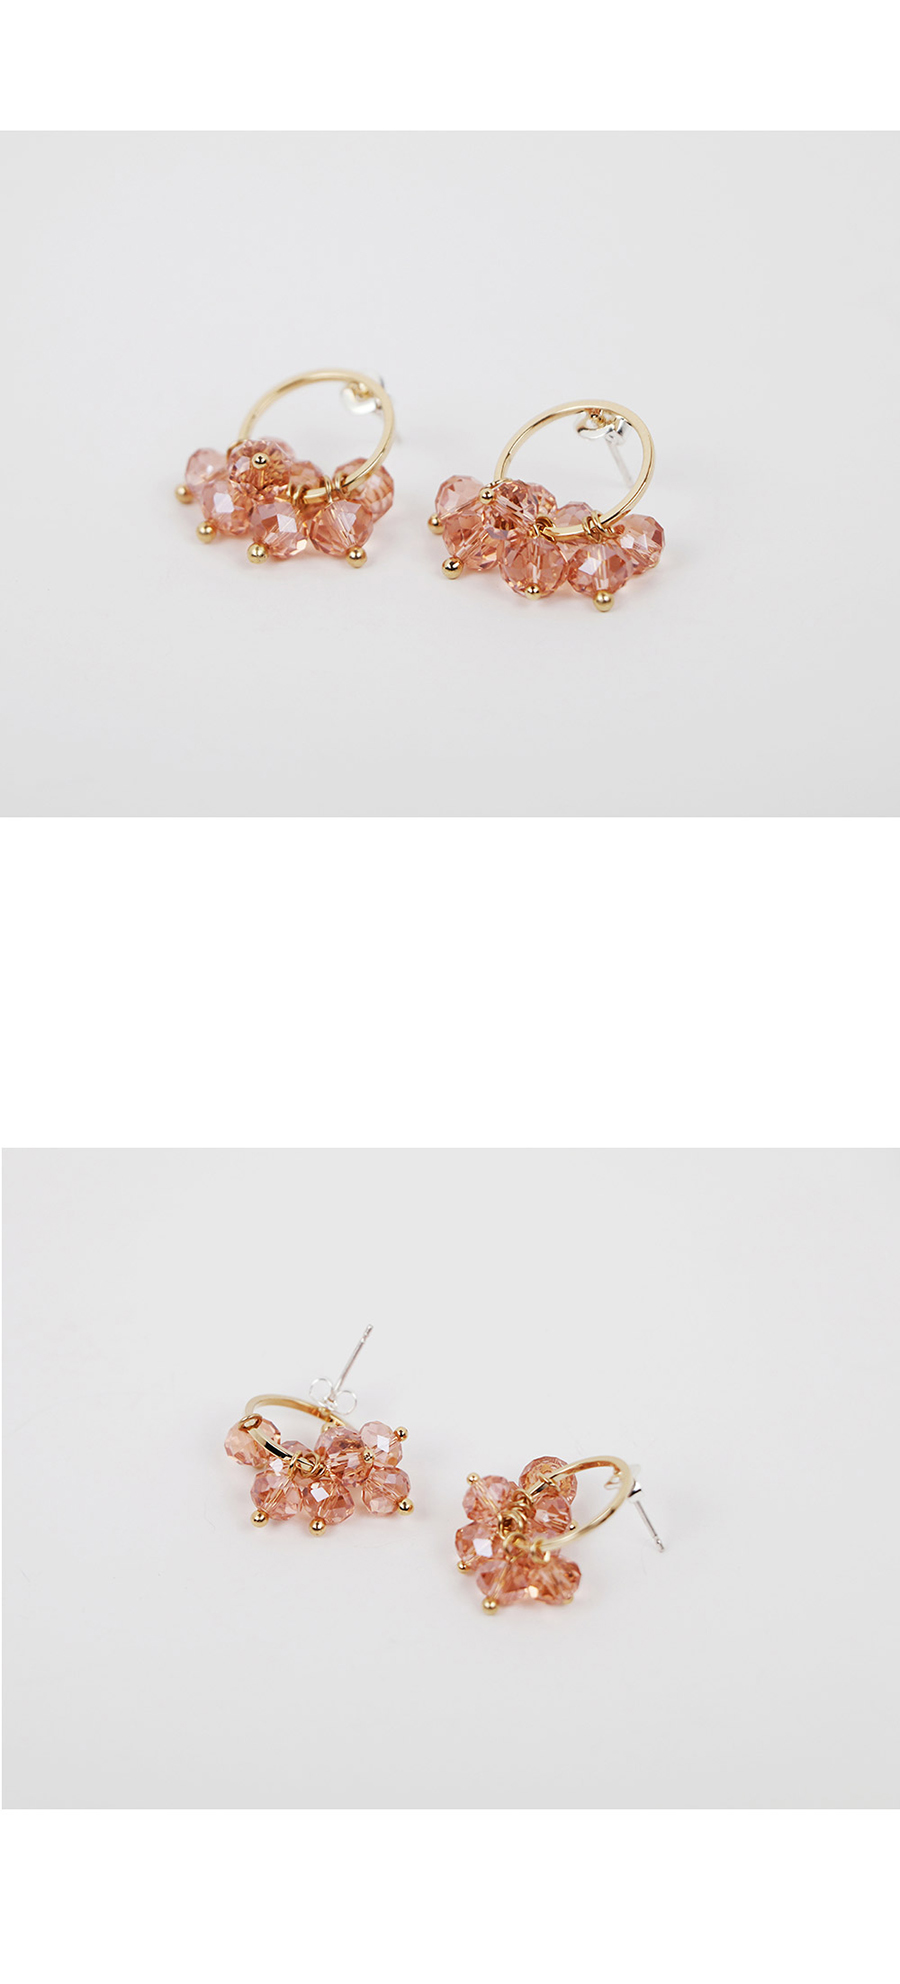 peach pink crystal blossom earring 25,000원 - 레스이즈모어 이동요망, X주얼리/시계, 귀걸이, 진주/원석 바보사랑 peach pink crystal blossom earring 25,000원 - 레스이즈모어 이동요망, X주얼리/시계, 귀걸이, 진주/원석 바보사랑